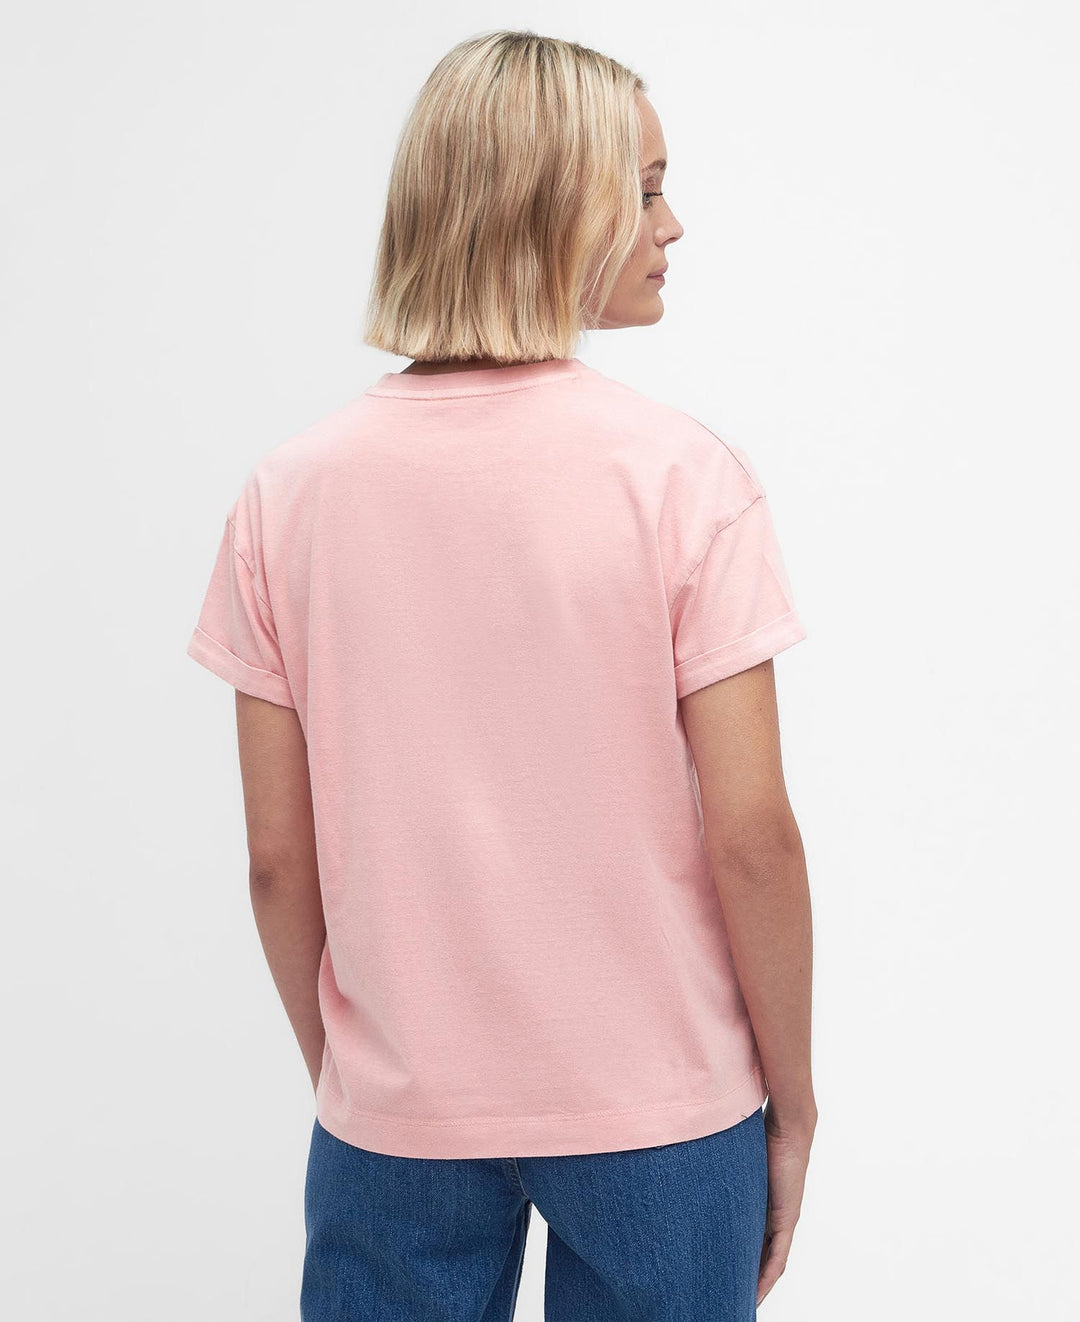 Barbour Ladies Sandgate T-shirt in Pink#Pink